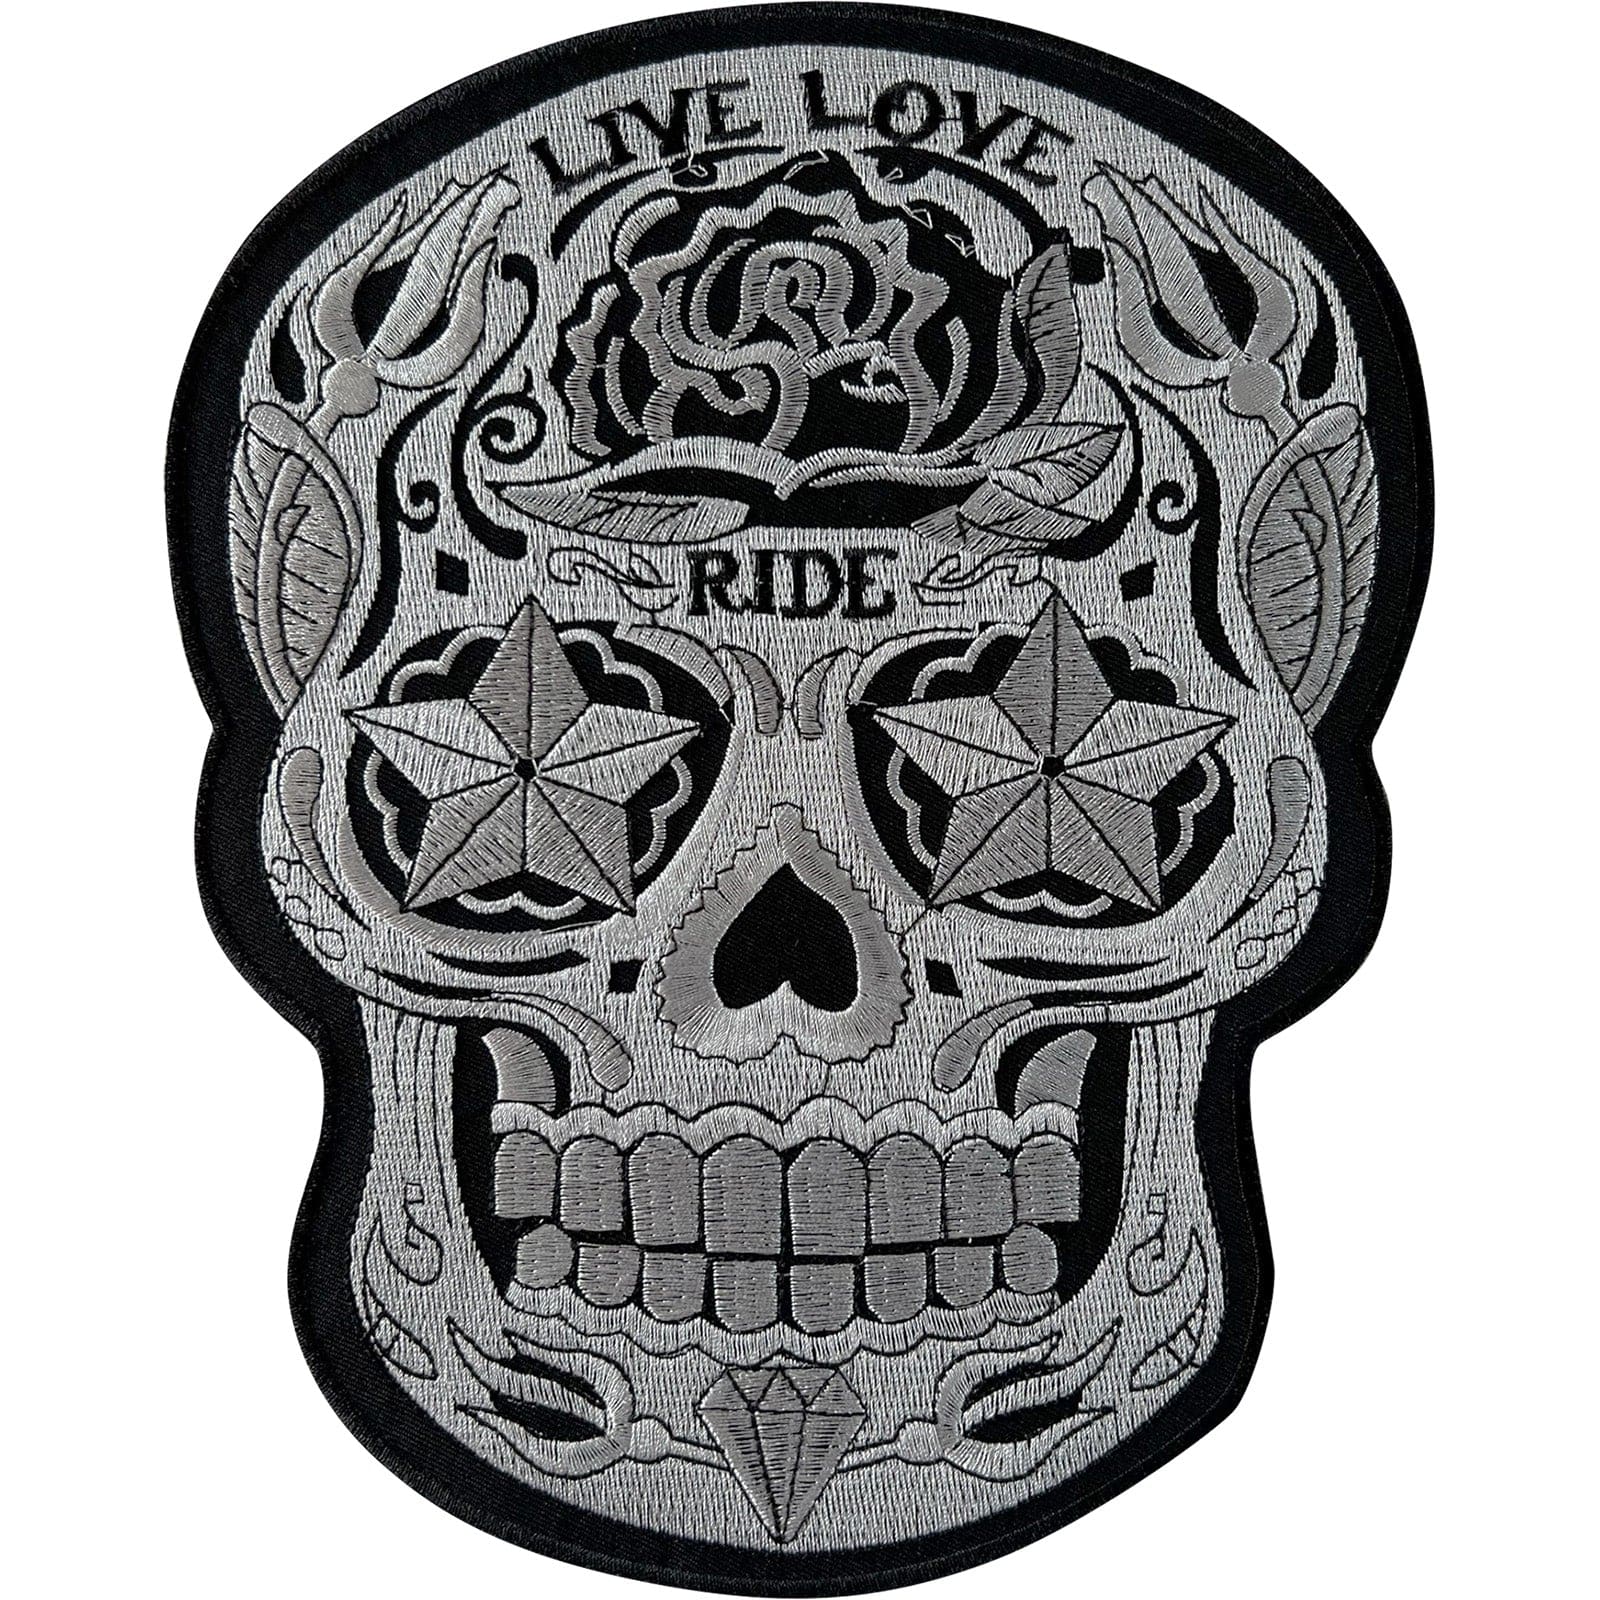 Big Large Sugar Skull Patch Iron Sew On Motorcycle Jacket Back Embroidered Badge